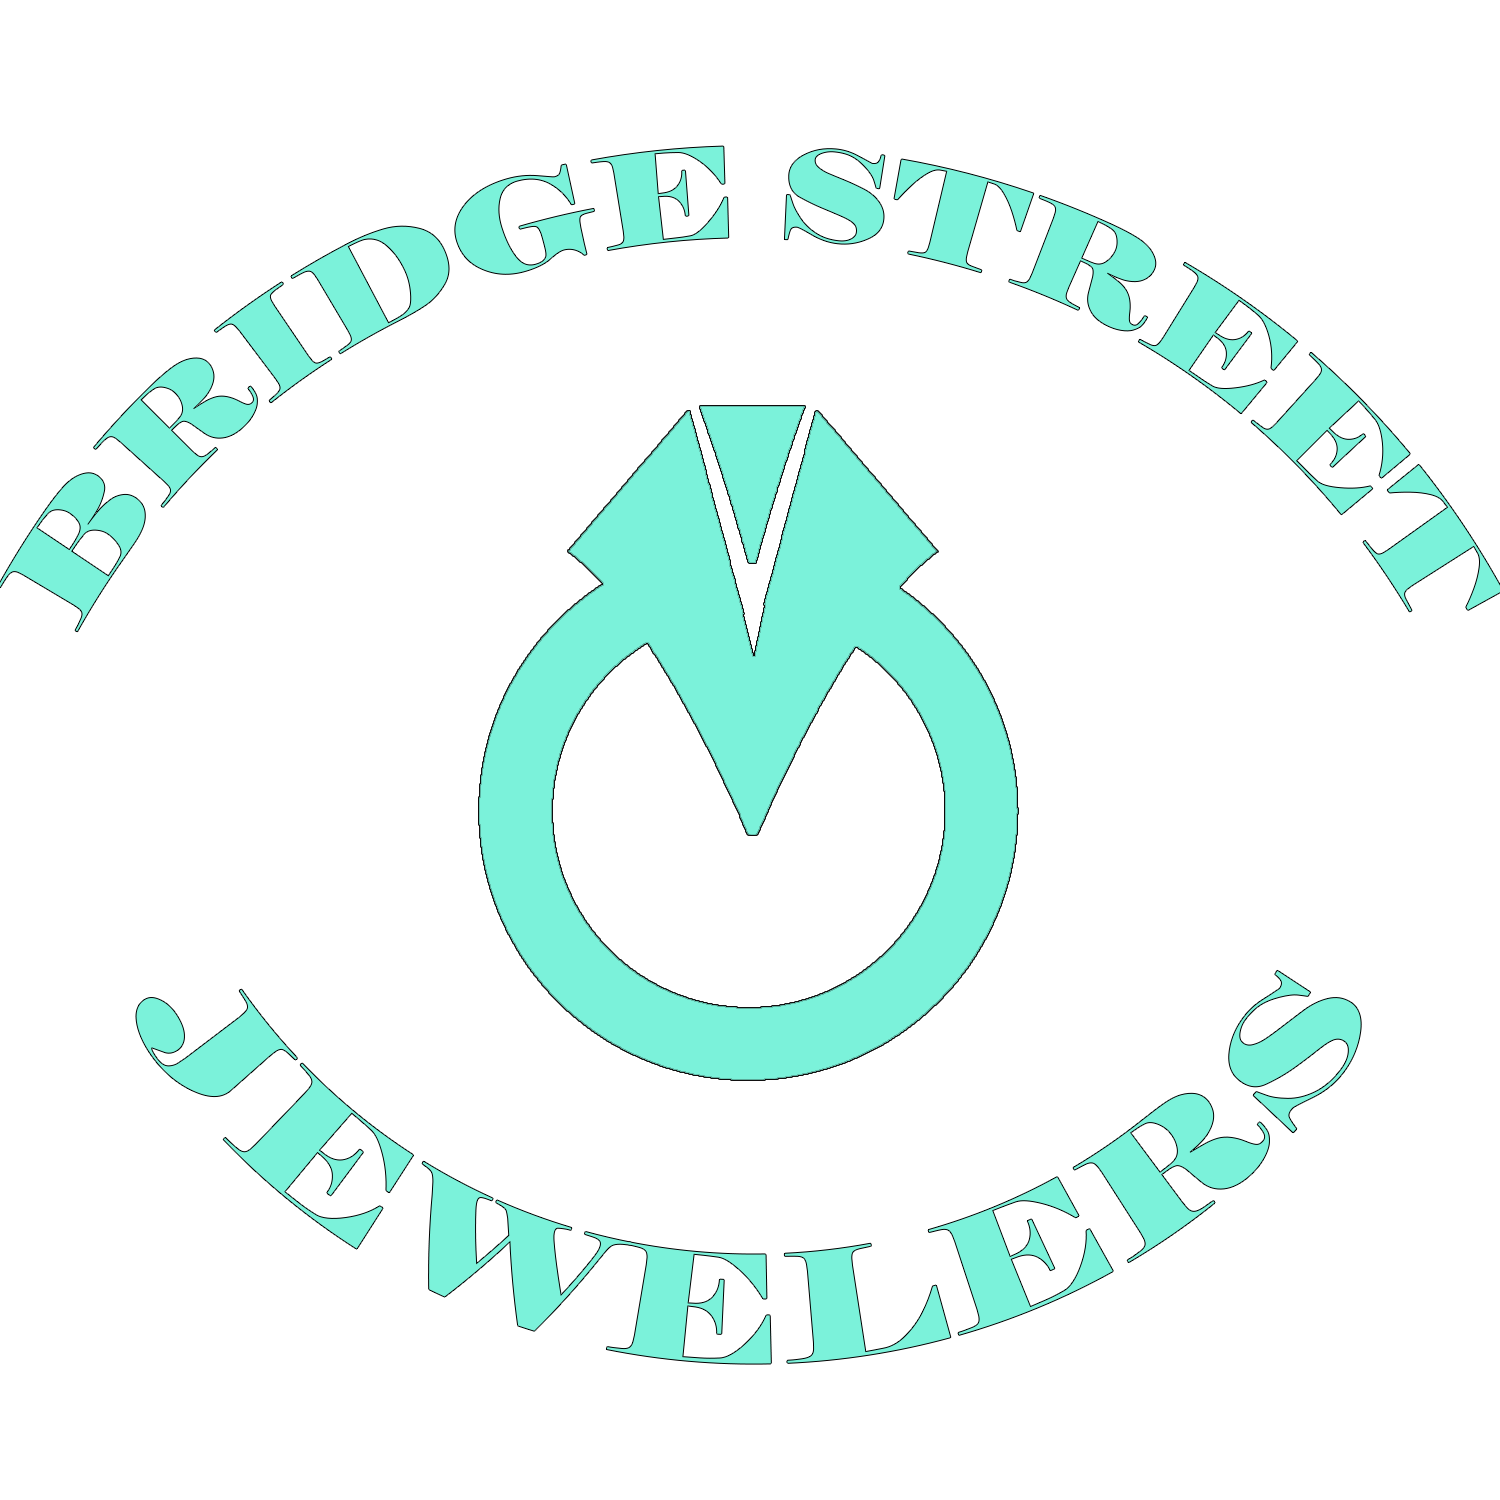 Bridge Street Jewelers